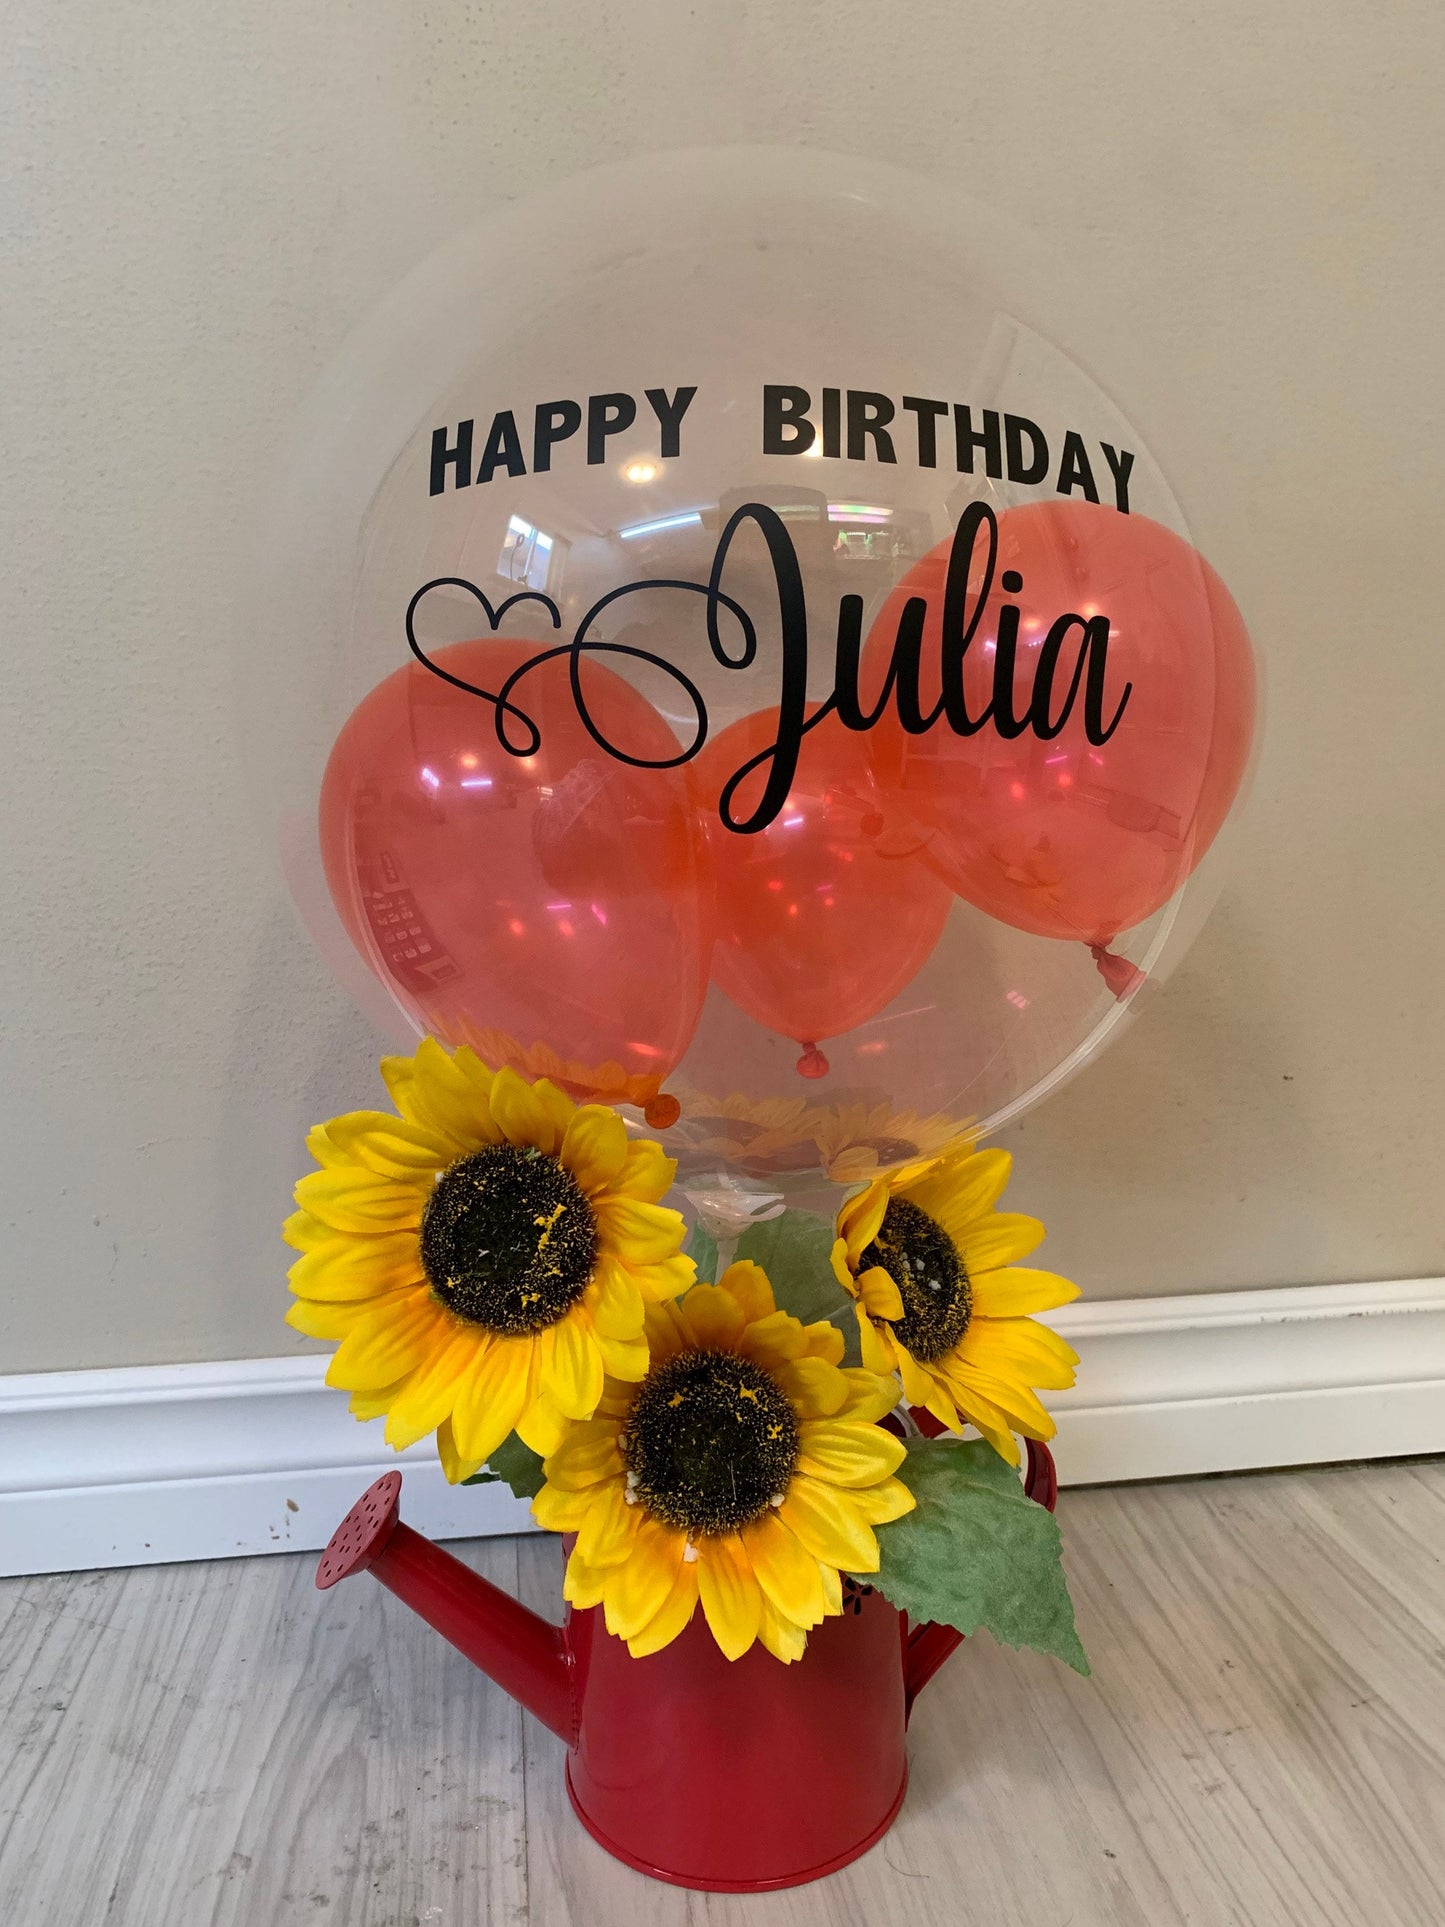 Personalized Balloon Centerpiece, Custom Inspired Balloon Gift Ideas